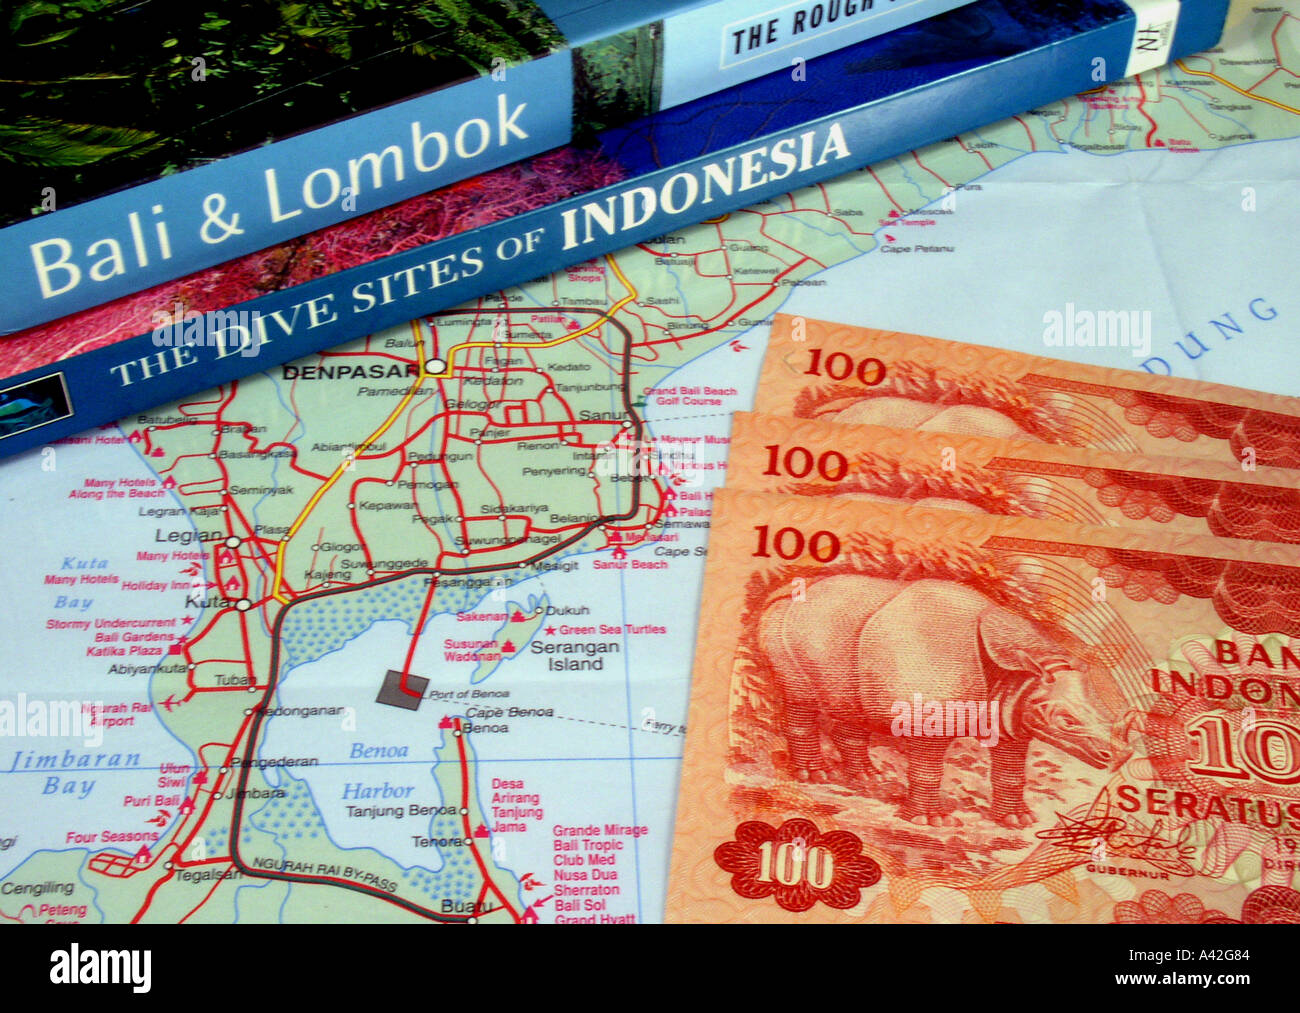 Karte von Denpasar Bali Lombok Indonesien Reiseführer Rough Guide Bali Lombok Dive Sites Indonesien Währung indonesische rupiah Stockfoto